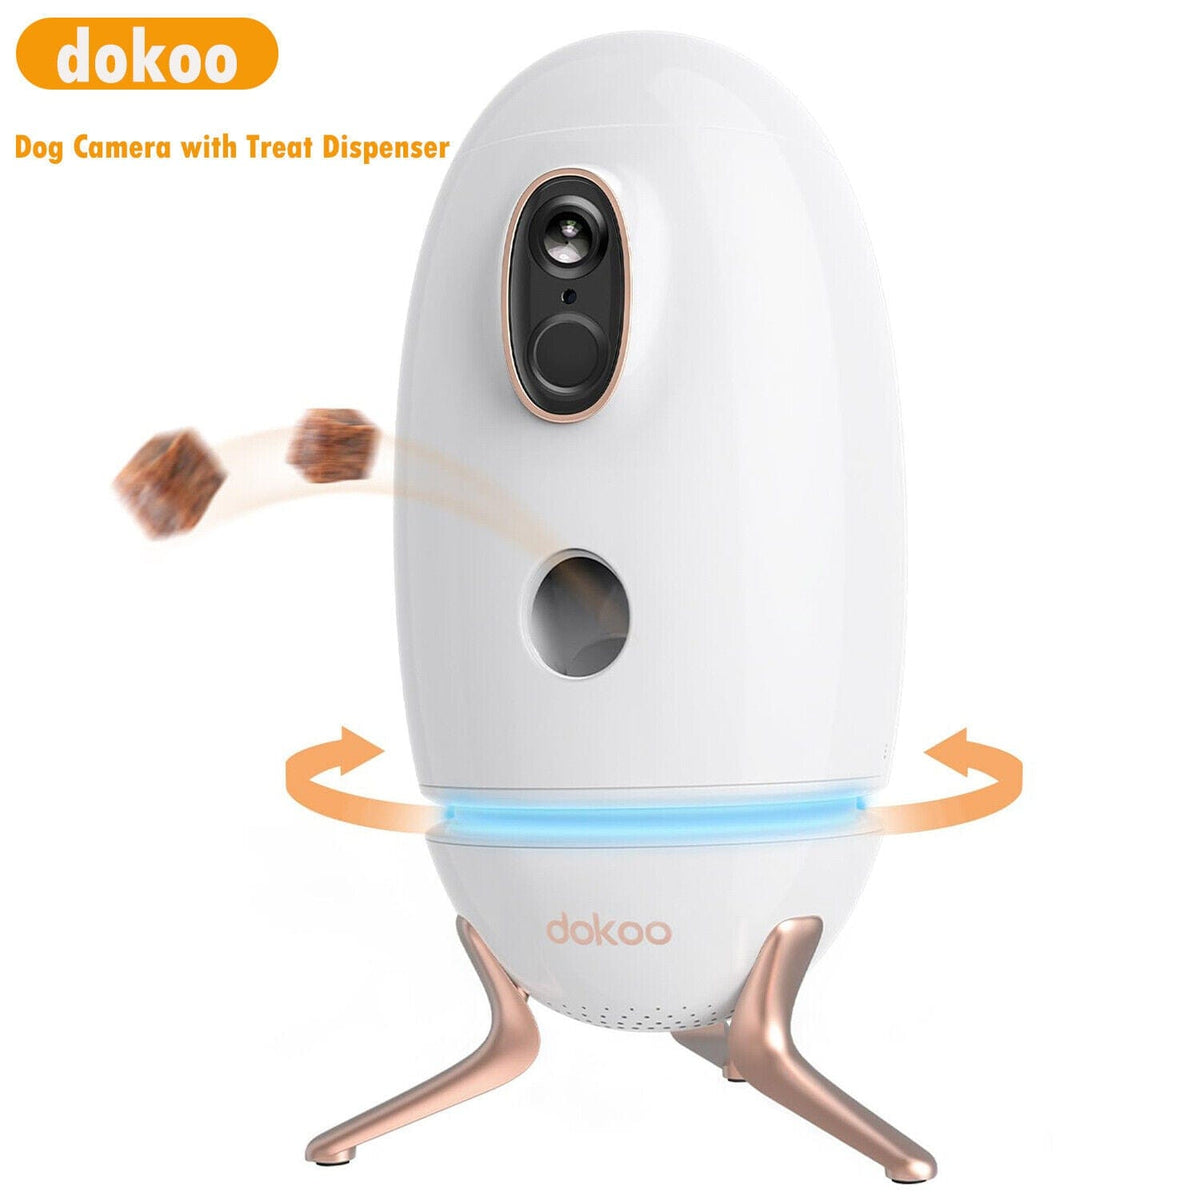 Dokoo Dog Camera with Treat Dispenser Feeder 330° View 2K/4MP QHD Pet Camera